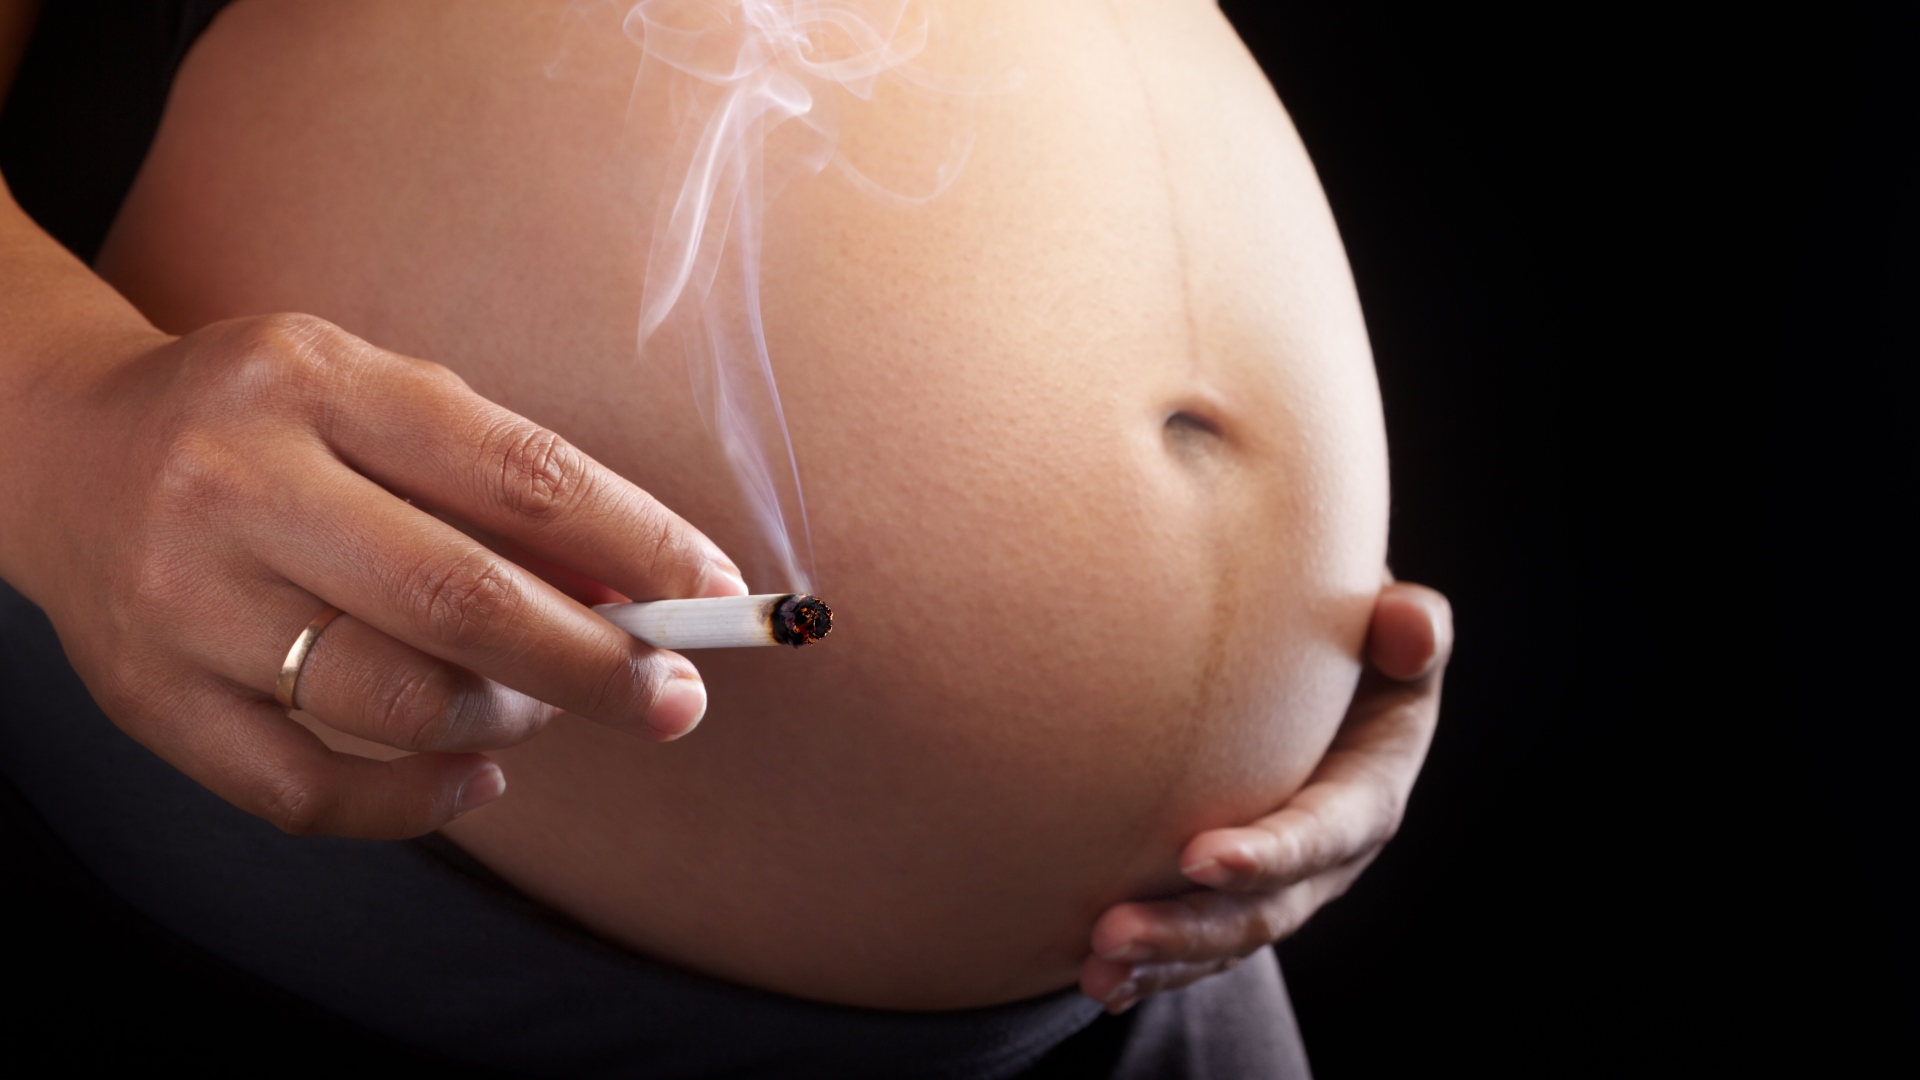 smoking during pregnancy research